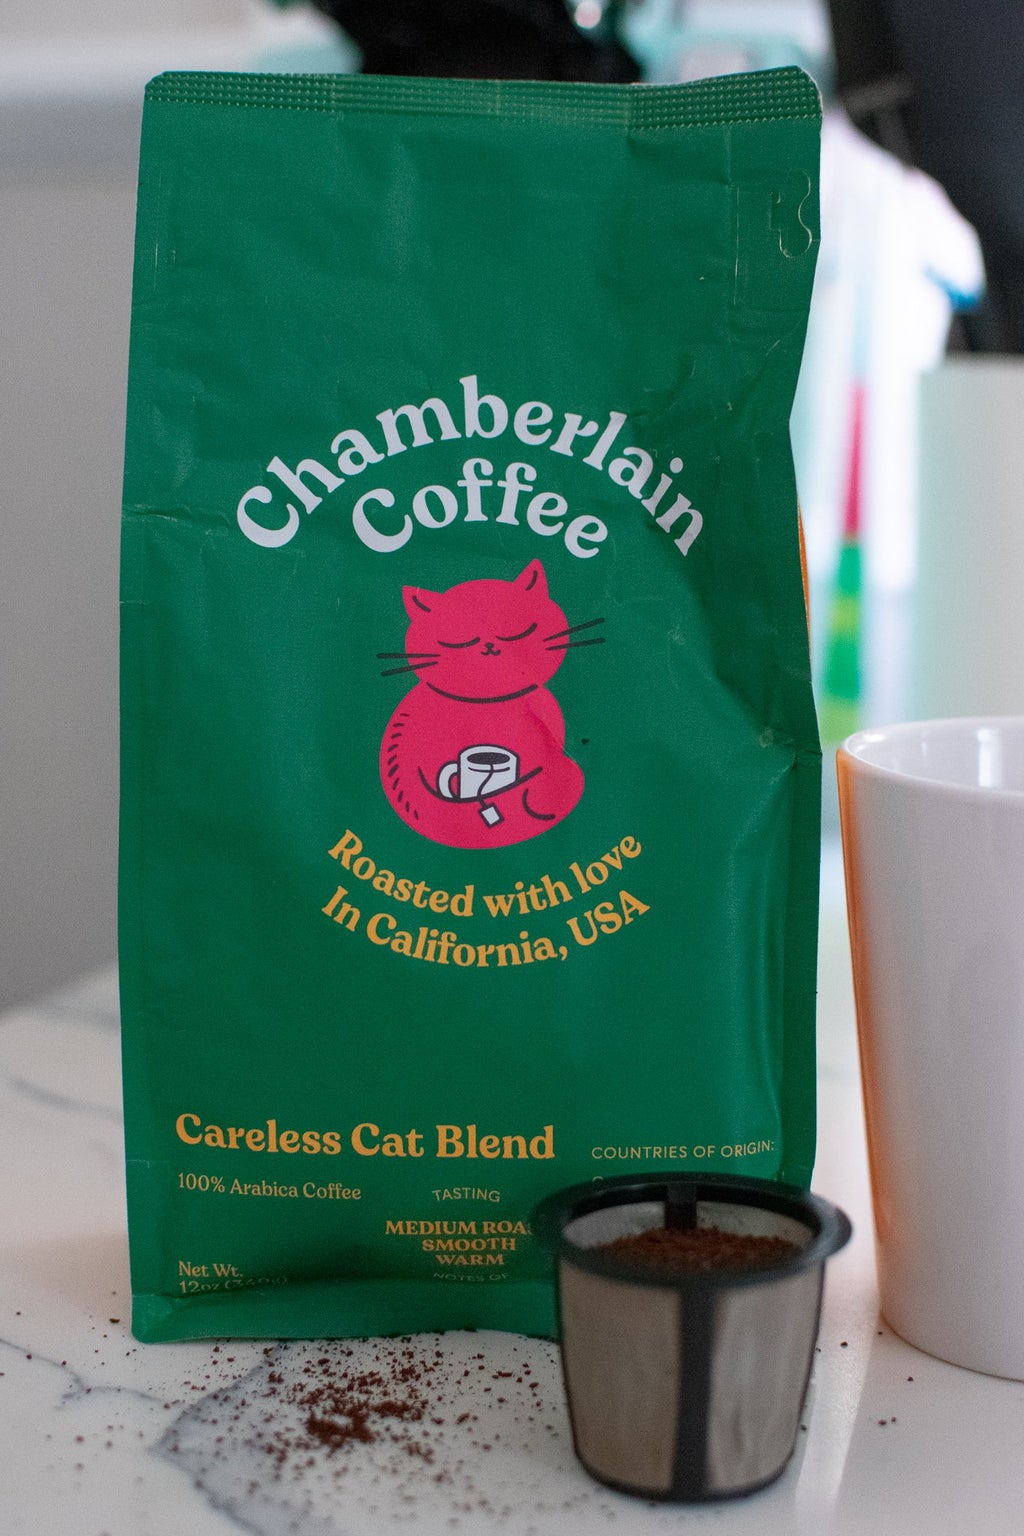 Product photo of Chamberlain Coffee bag, Careless Cat blend